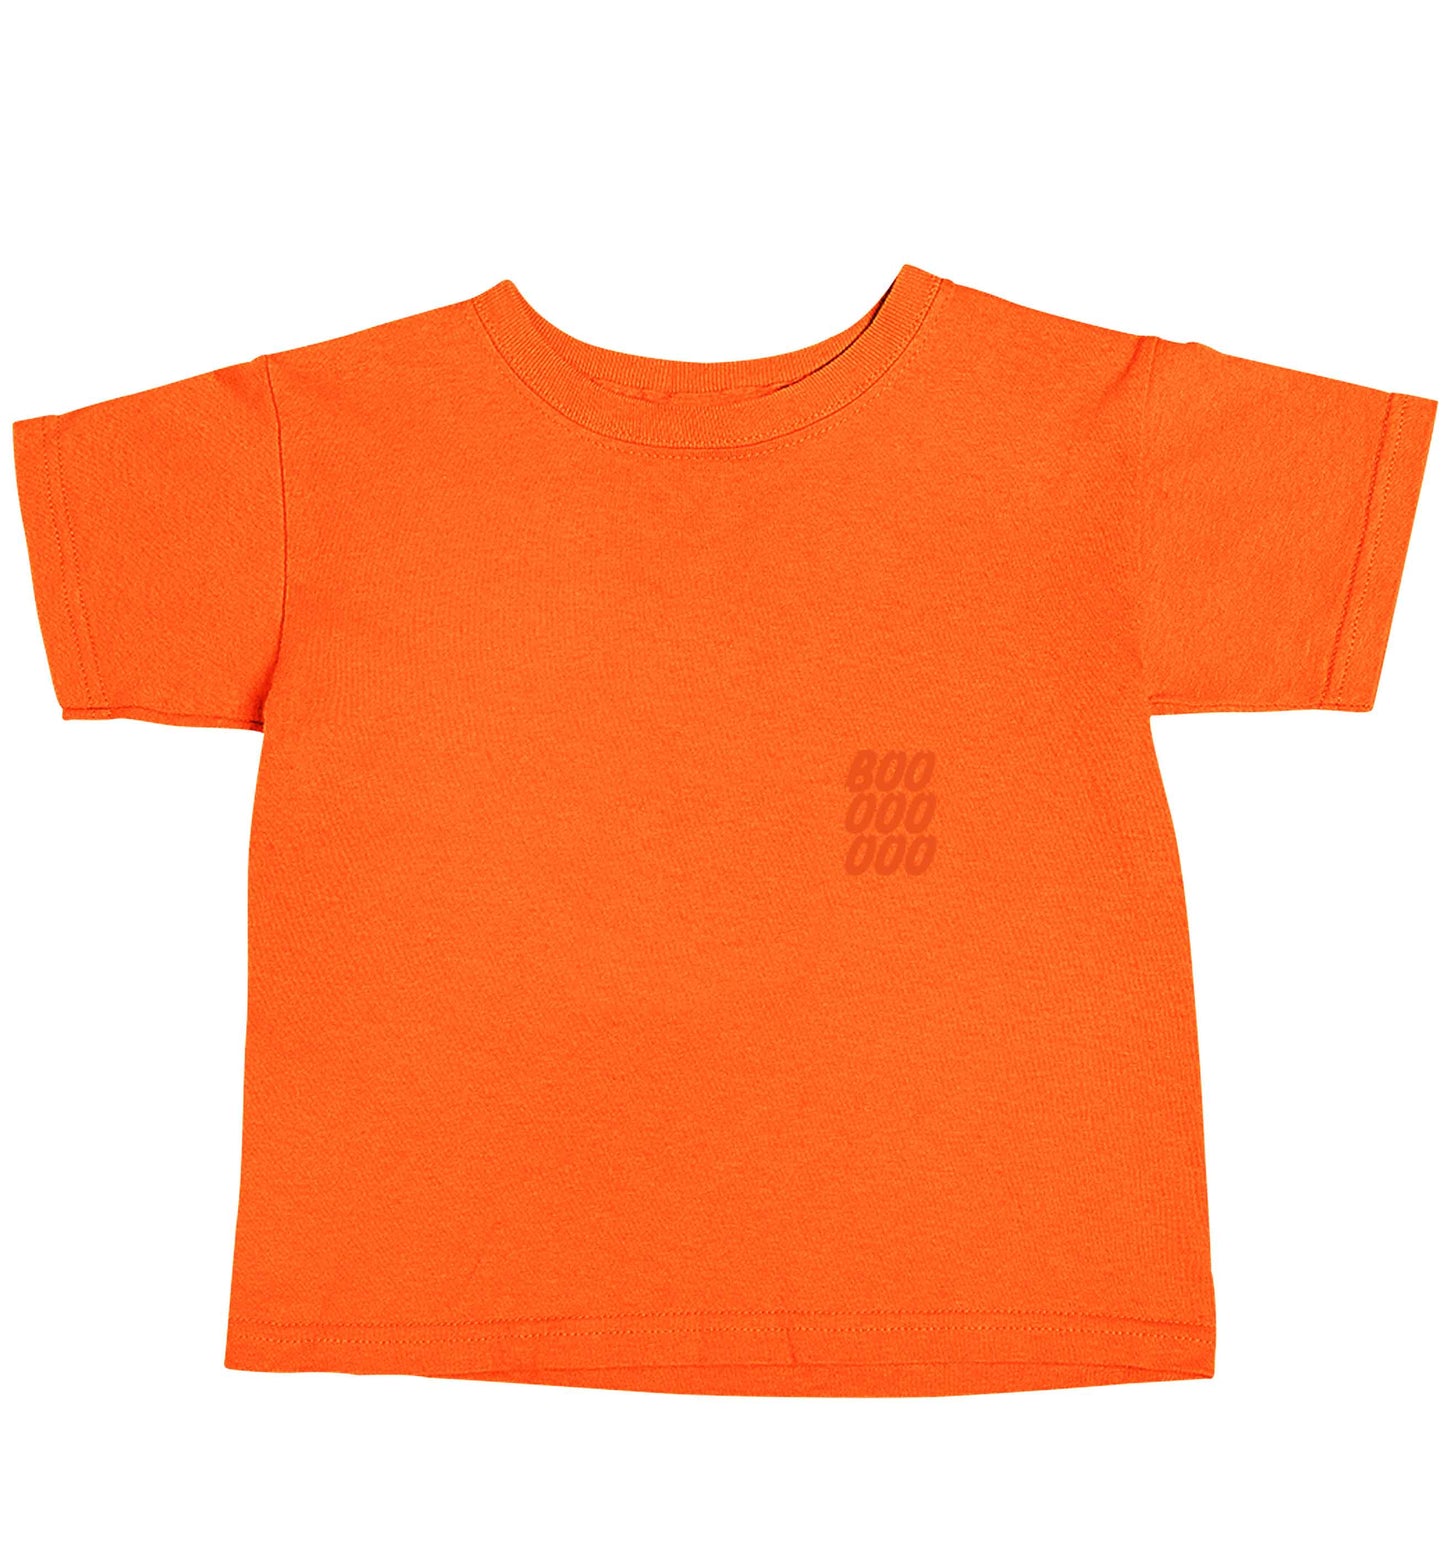 Boo pocket orange baby toddler Tshirt 2 Years